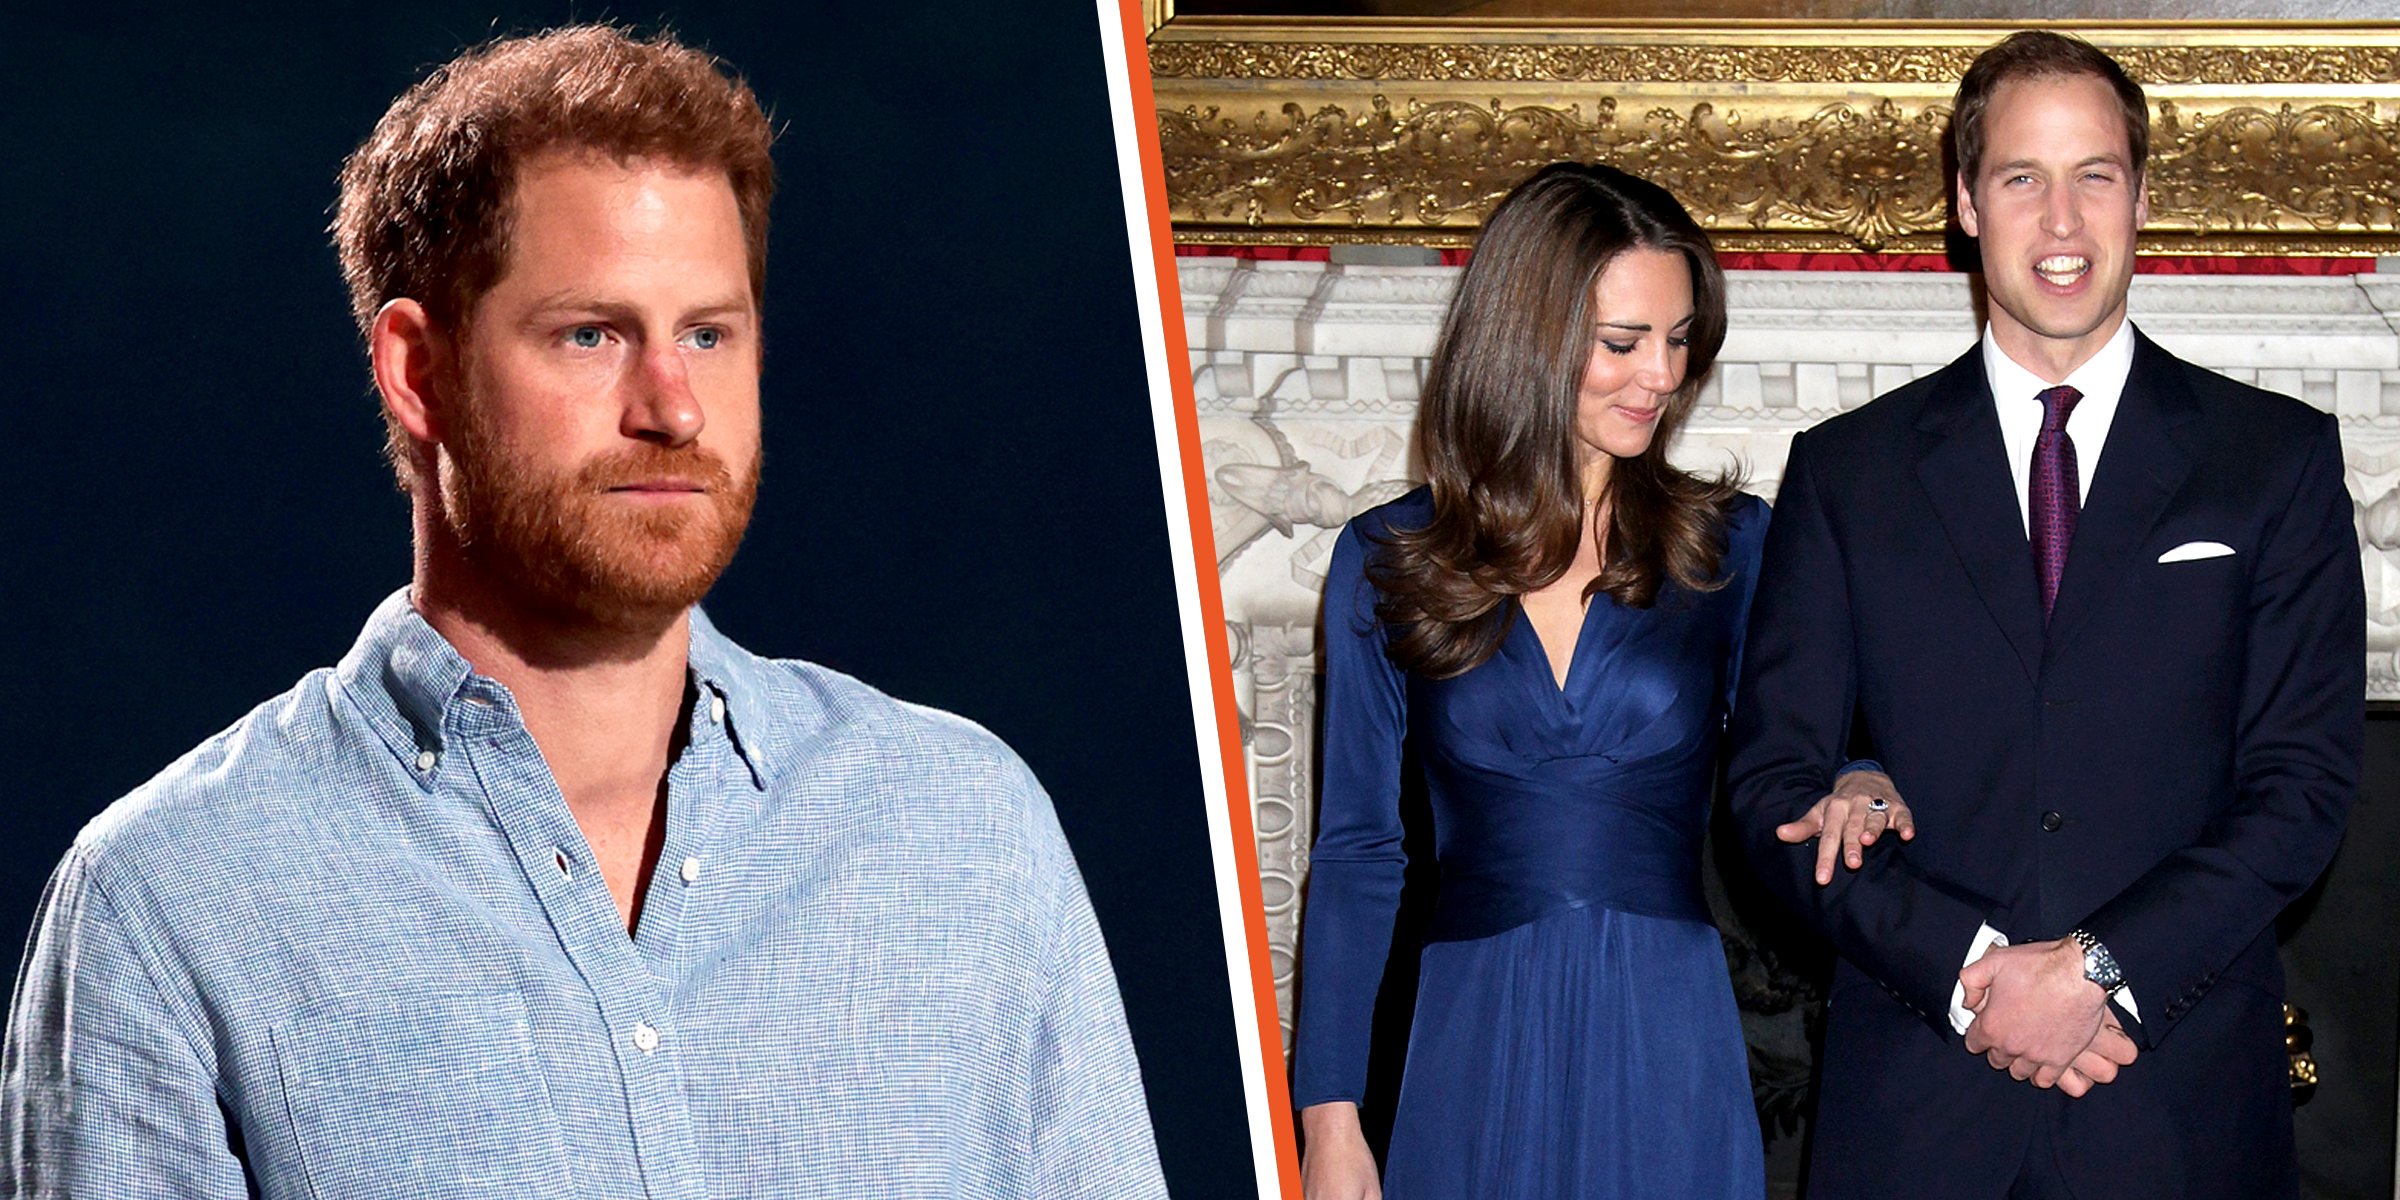 Prince Harry | Duchesse de Galles, Kate Middleton, et Prince William | Source : Getty Images